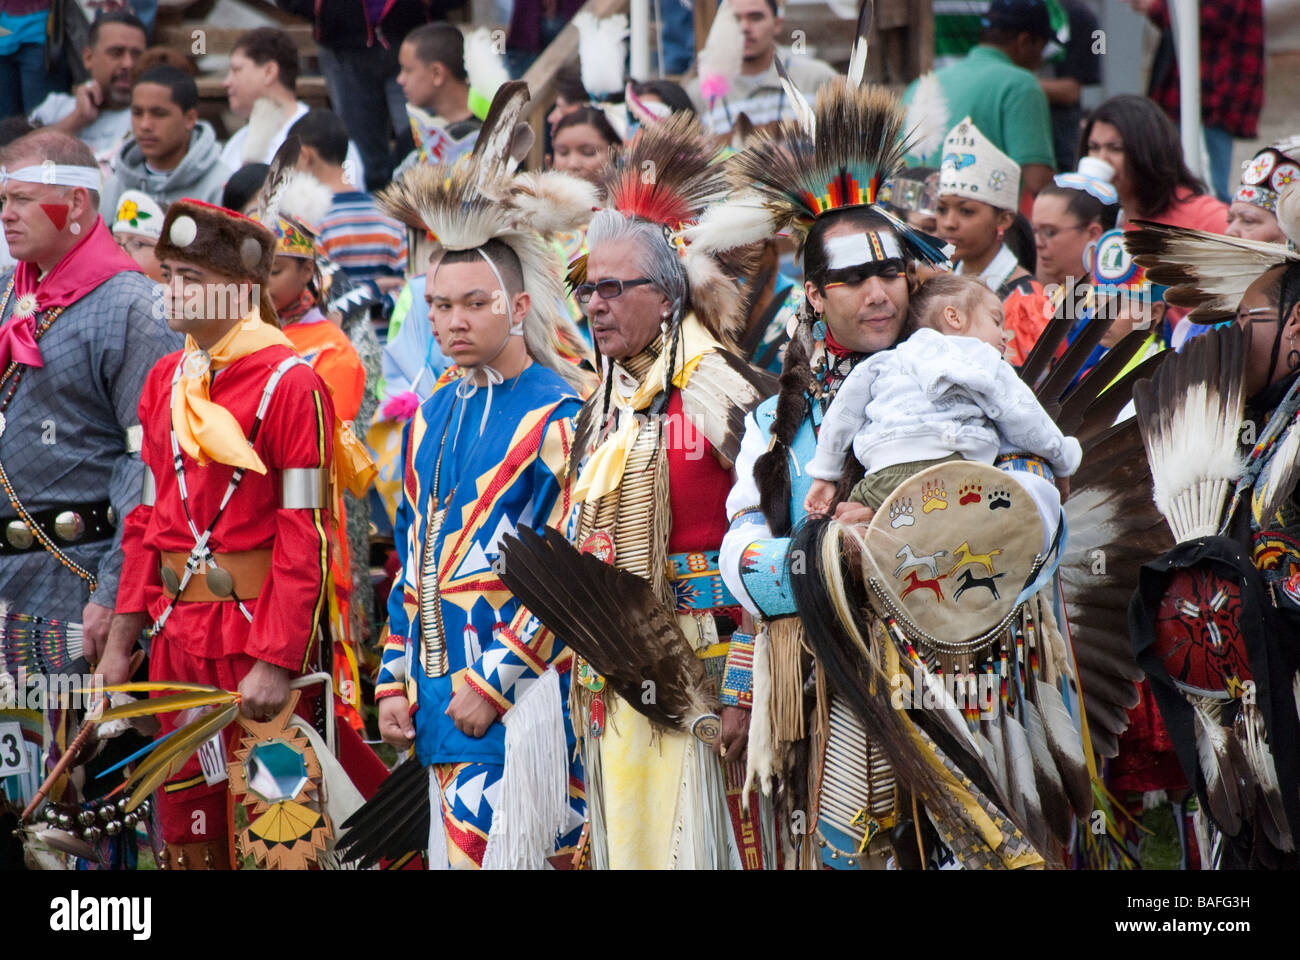 Members of the Haliwa Saponi Indian Tribe in North Carolina wearing ...